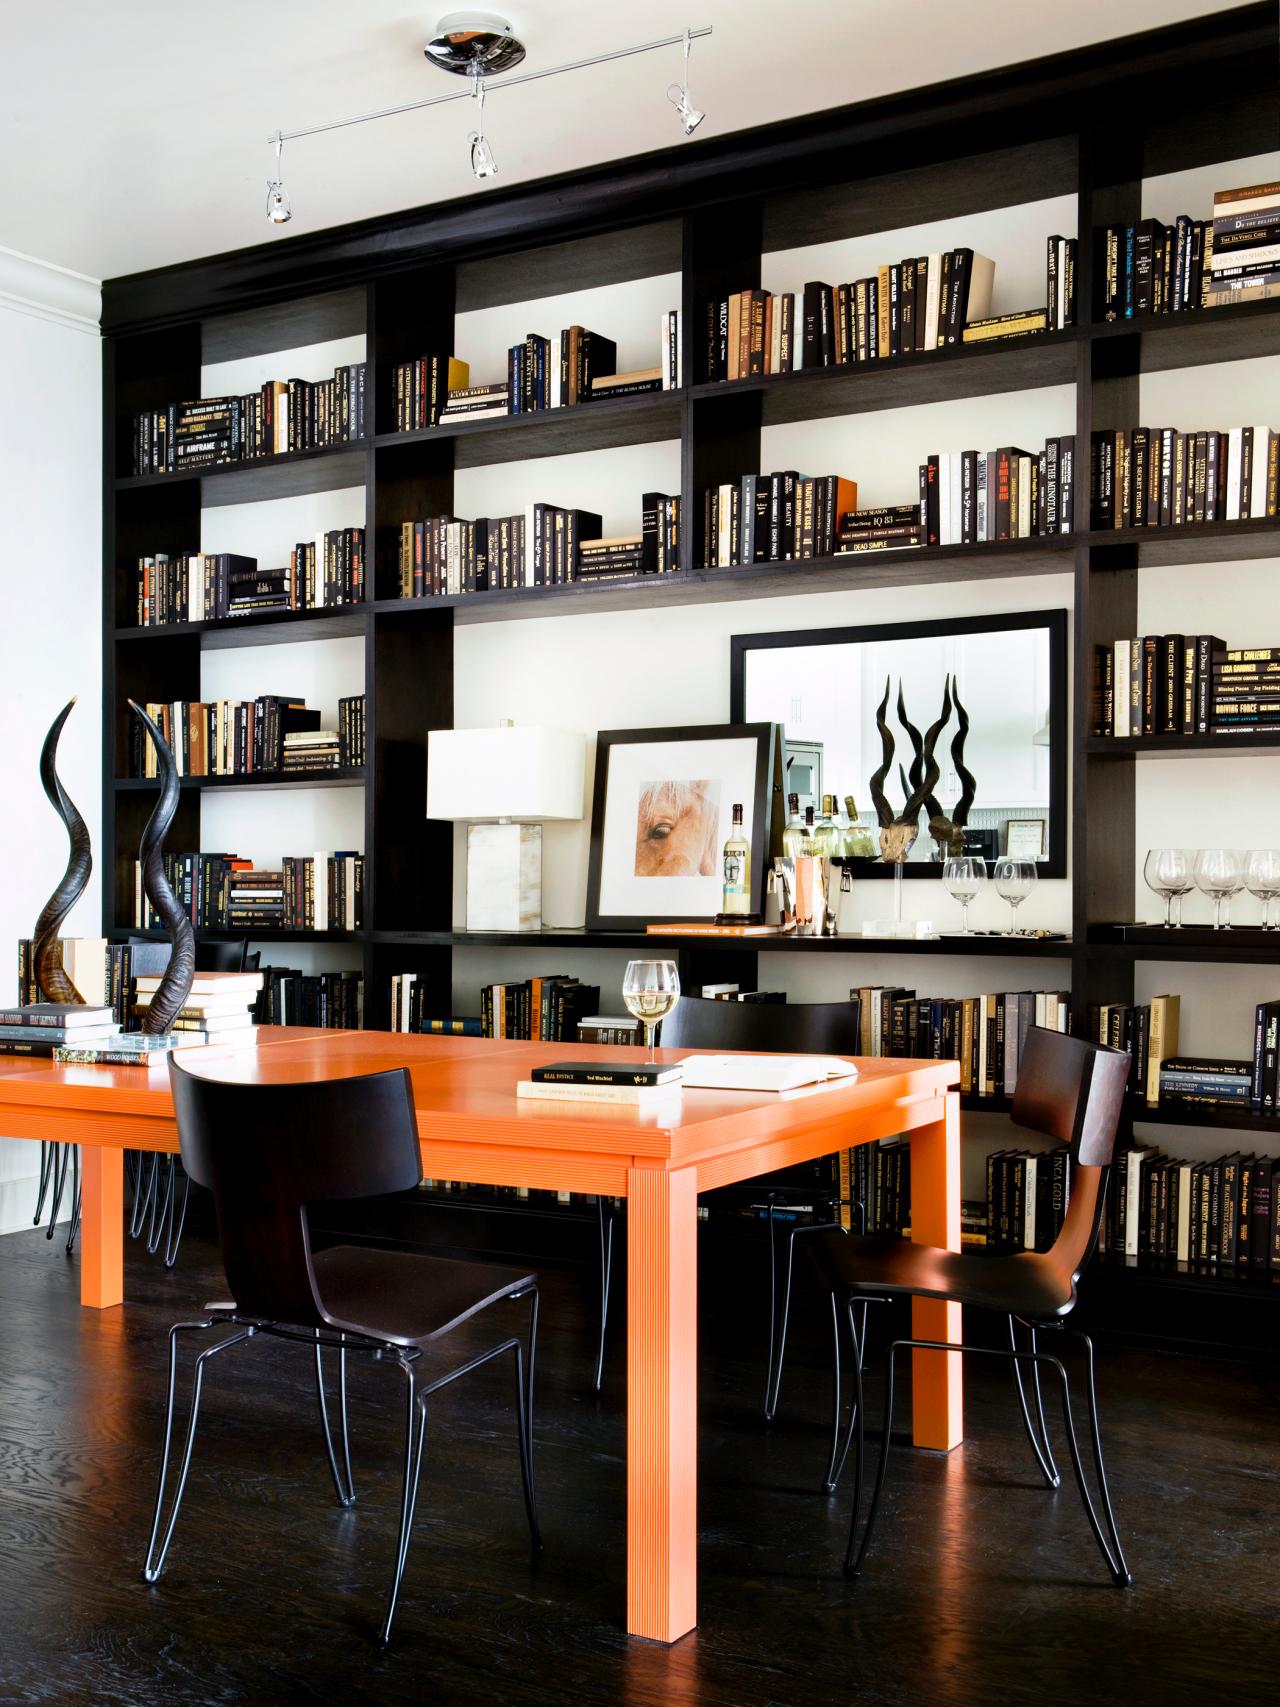 25 Craftsman Home Office Design Ideas - Decoration Love